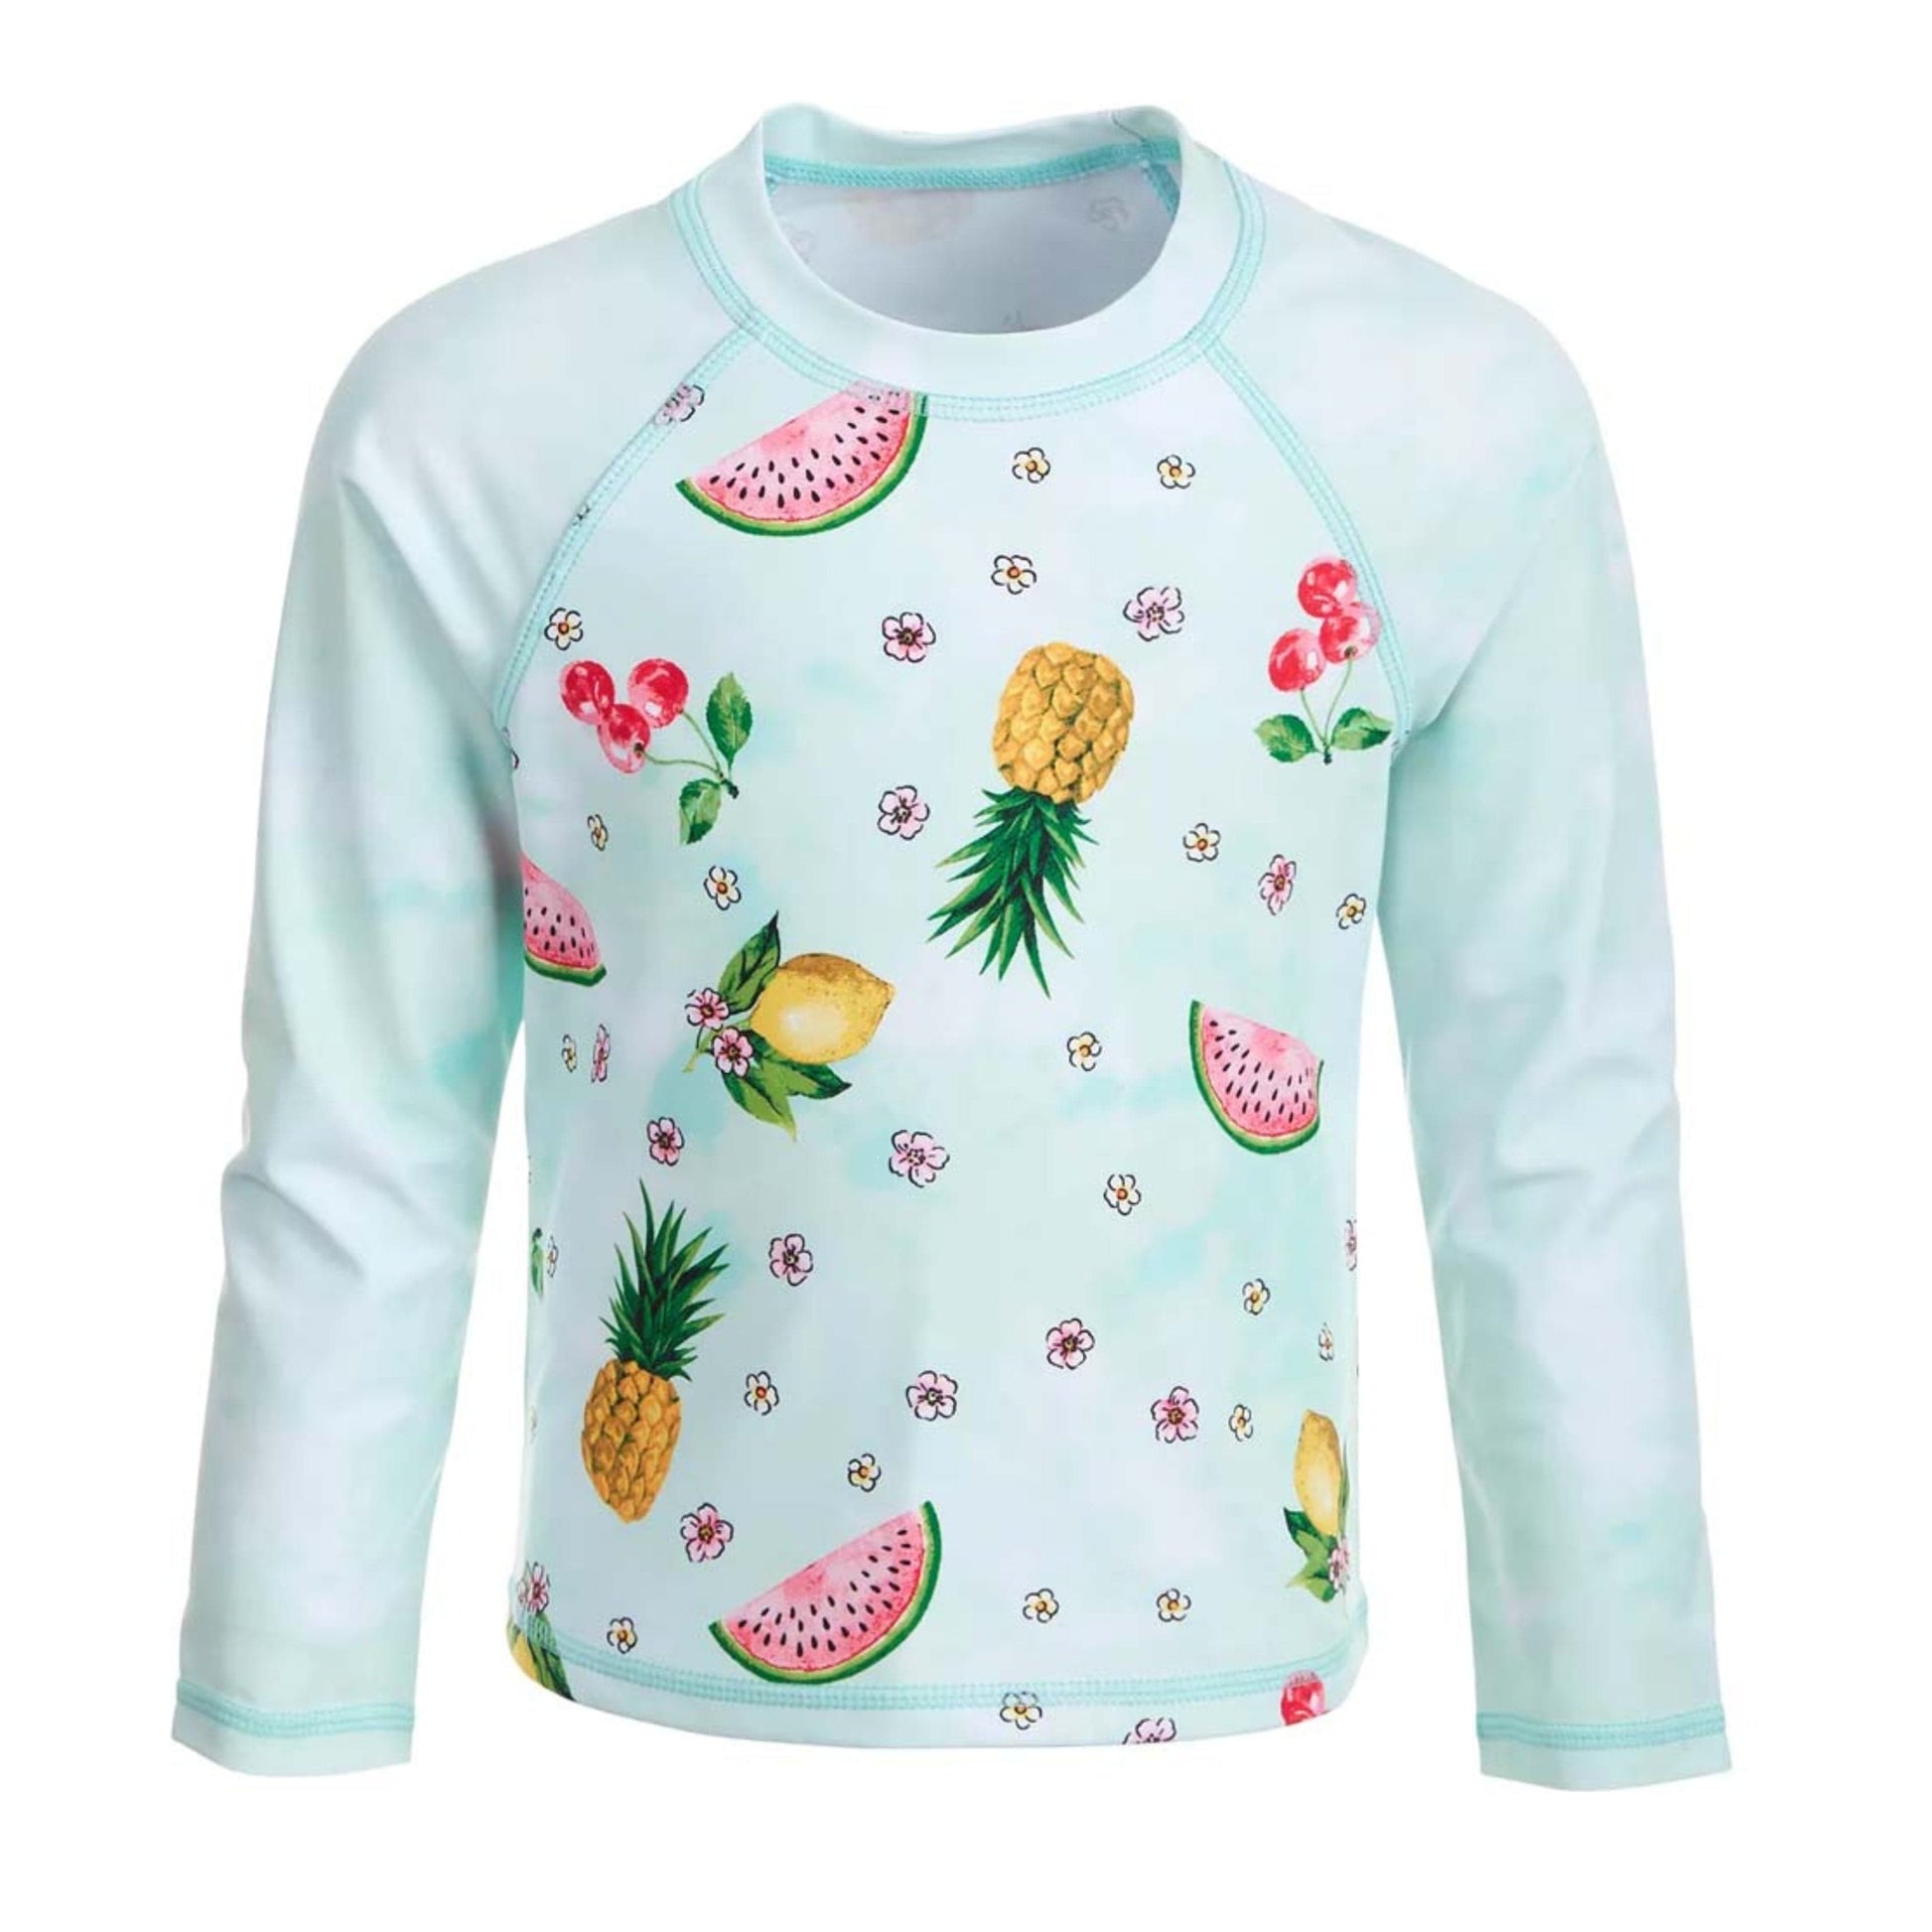 MIKEN MERMAIDS Girls Swimwear 4 Years / Multi-Color MIKEN MERMAIDS - Kids - Aqua & Navy Tropical Fruit Long-Sleeve Rashguard